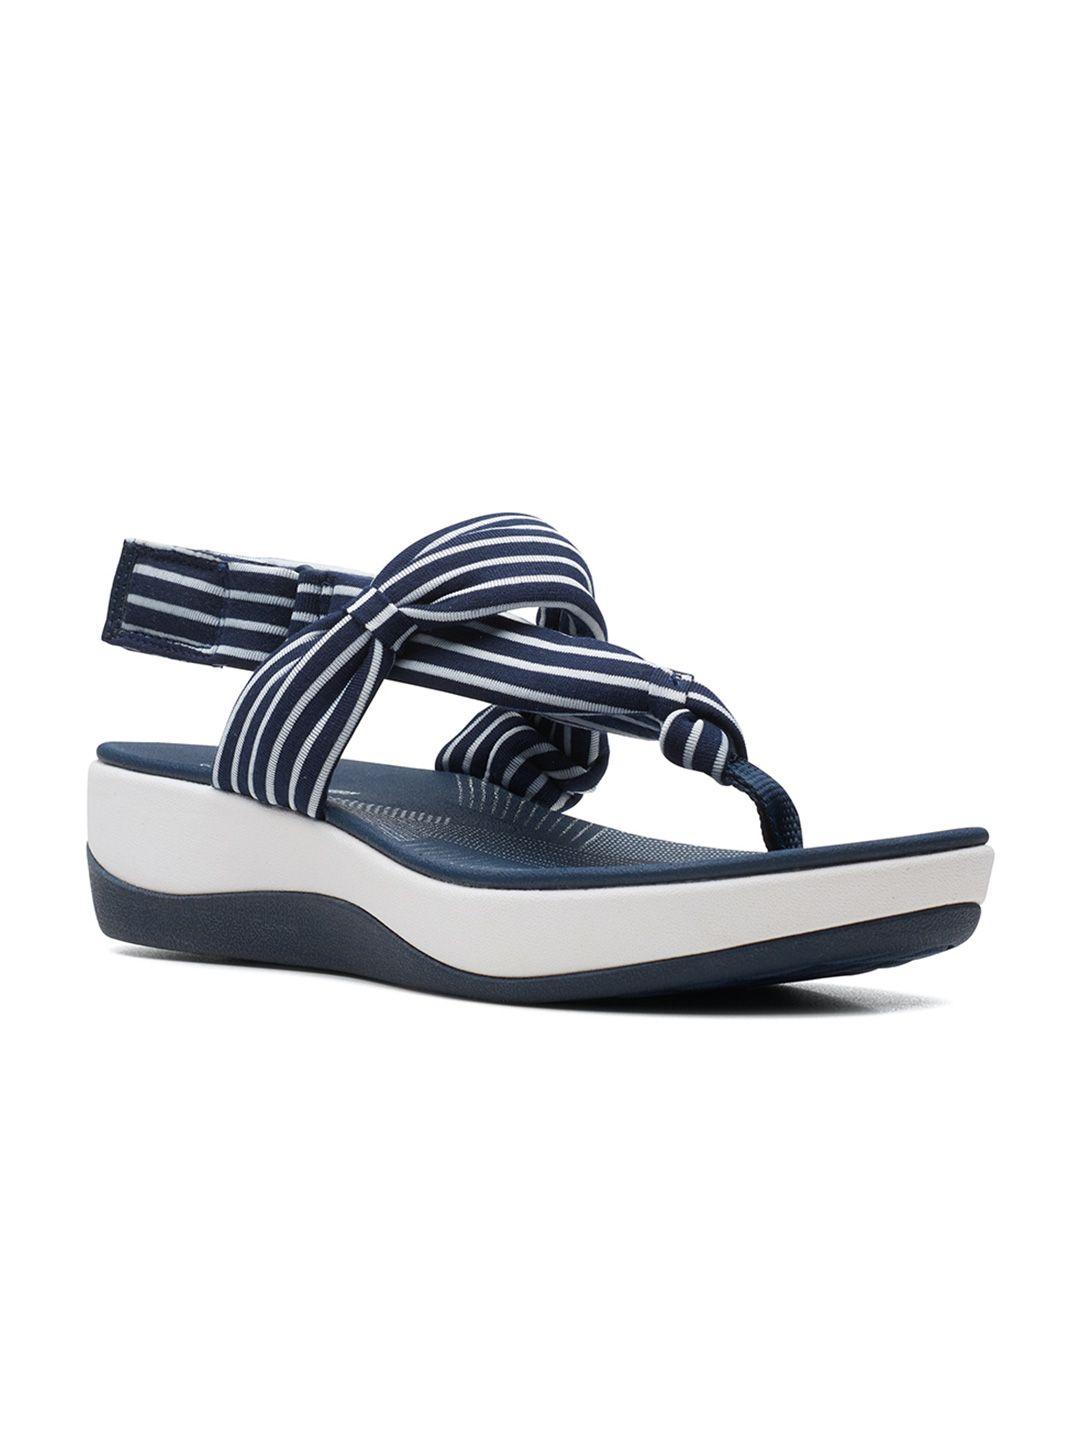 clarks-navy-blue-printed-comfort-sandals